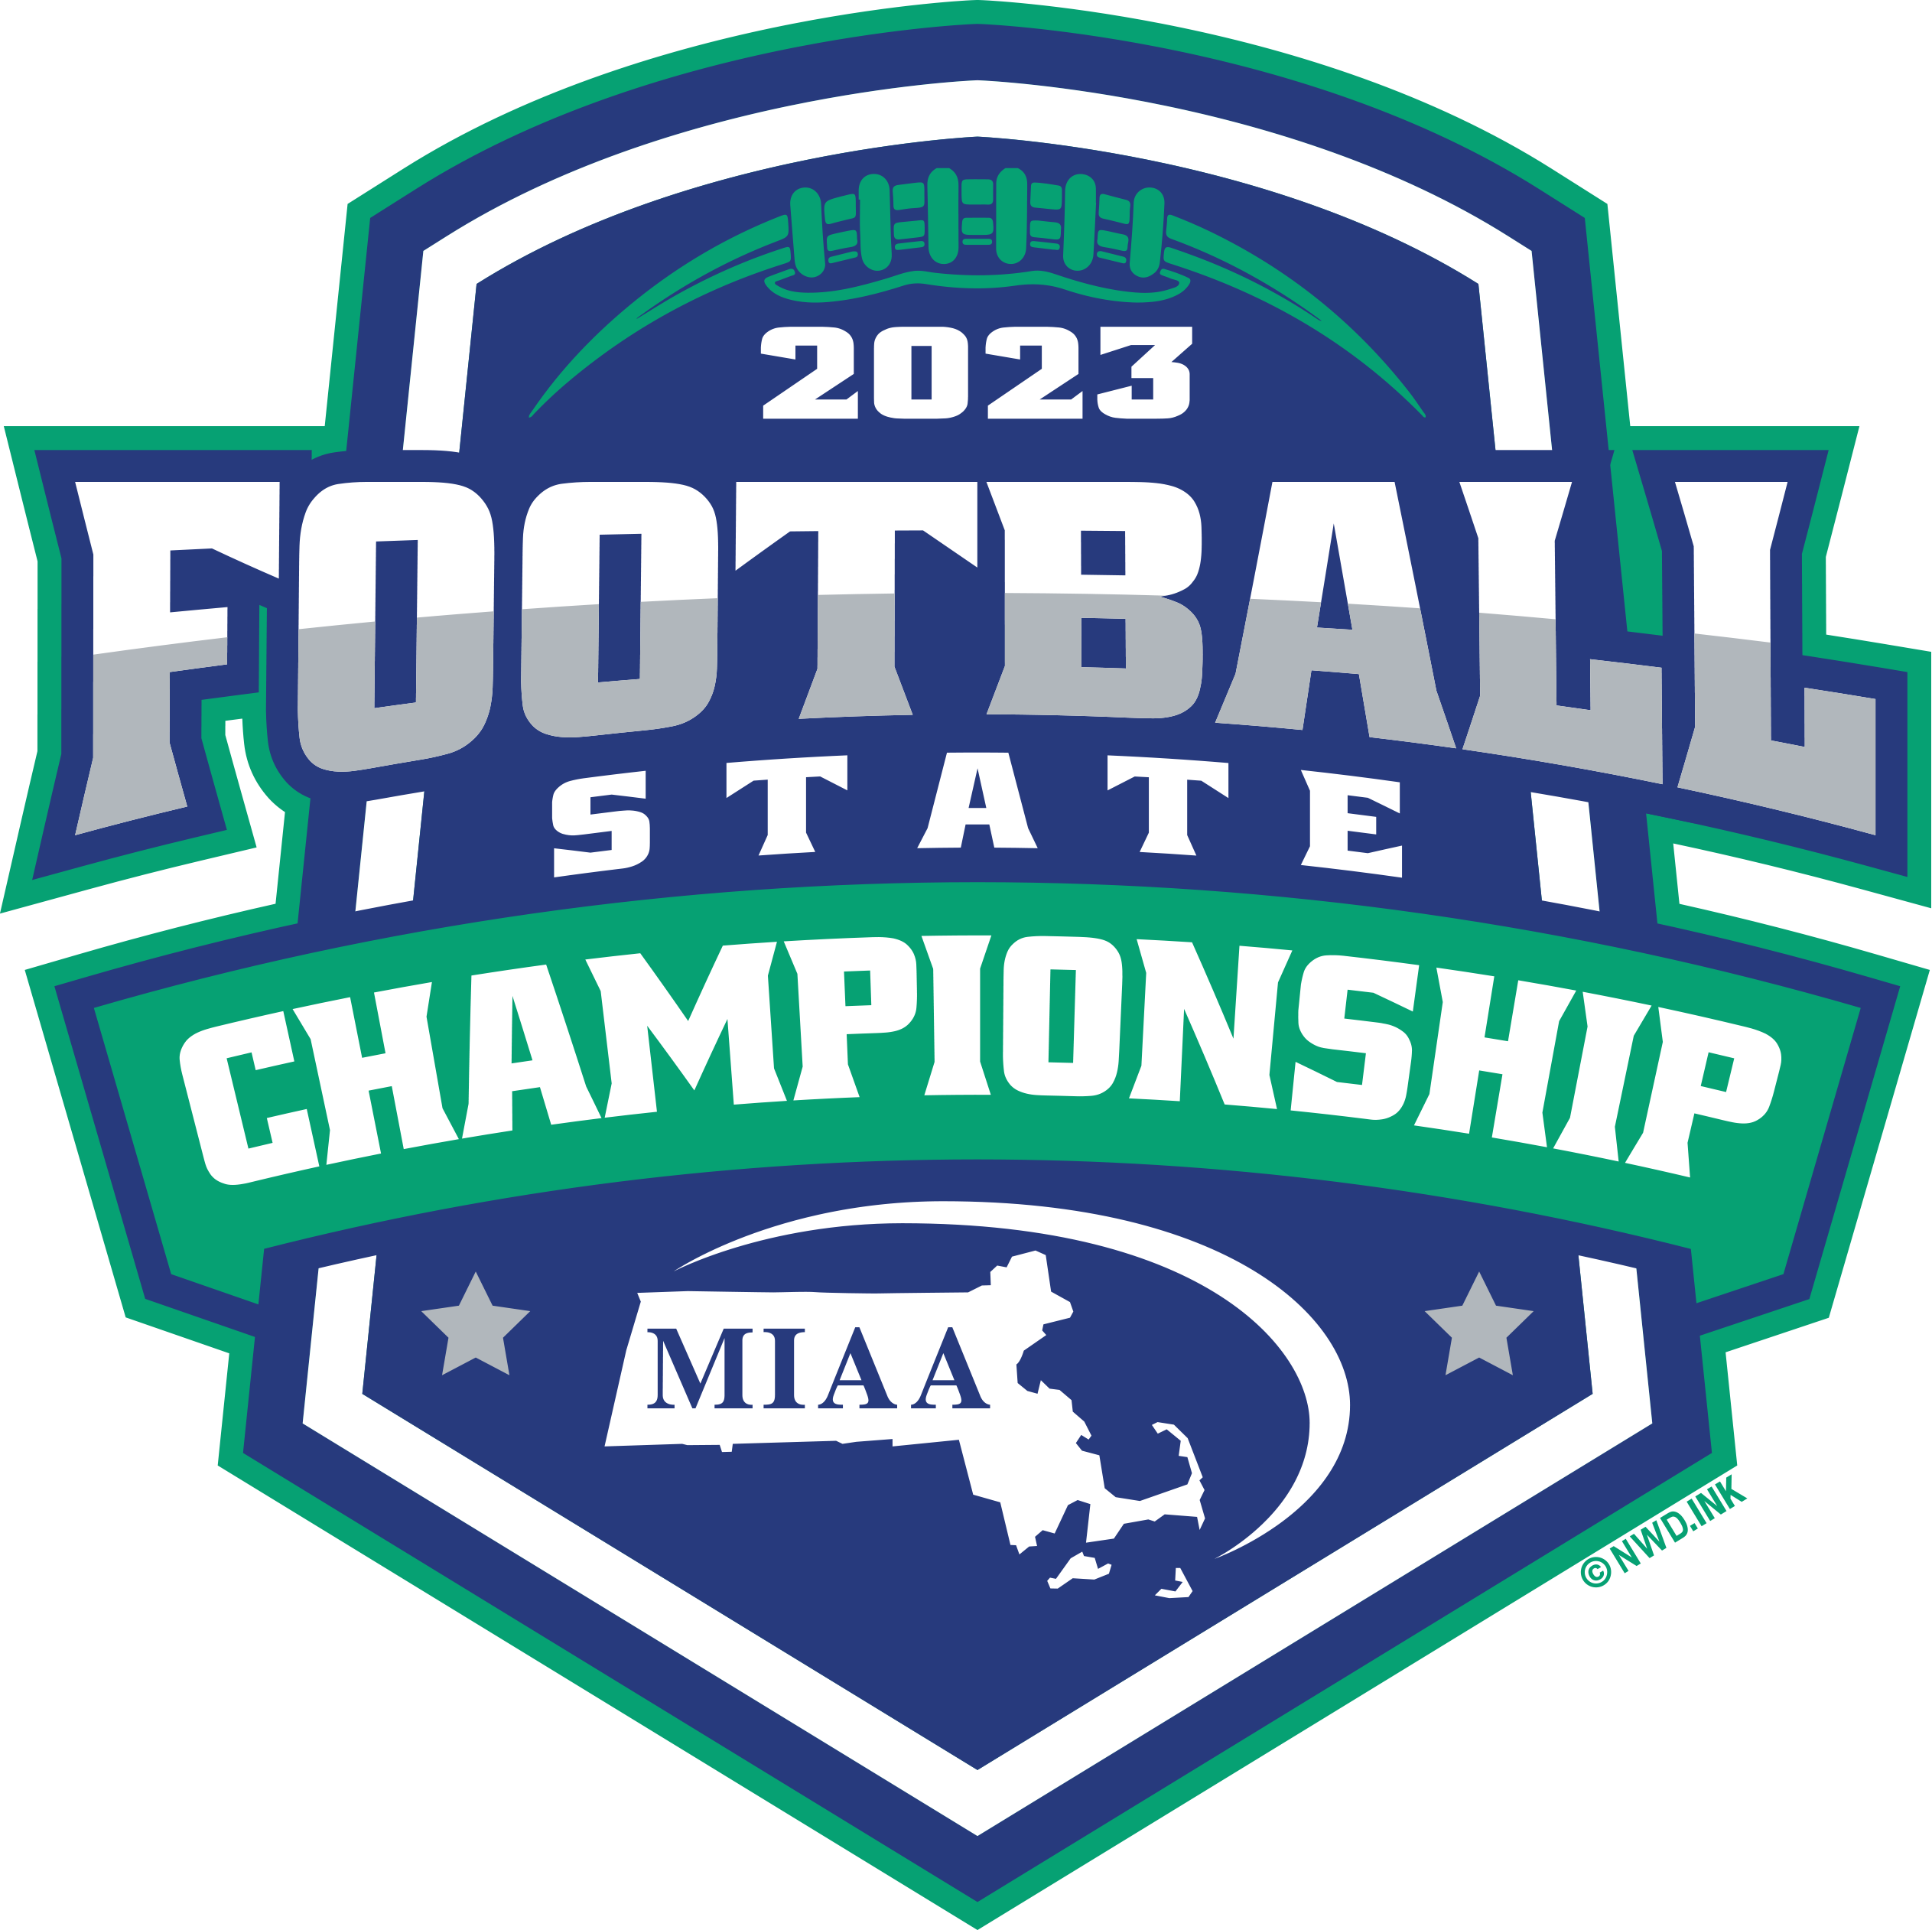 2023 (MIAA) Football State Championship 38135RI Northwest Designs Ink